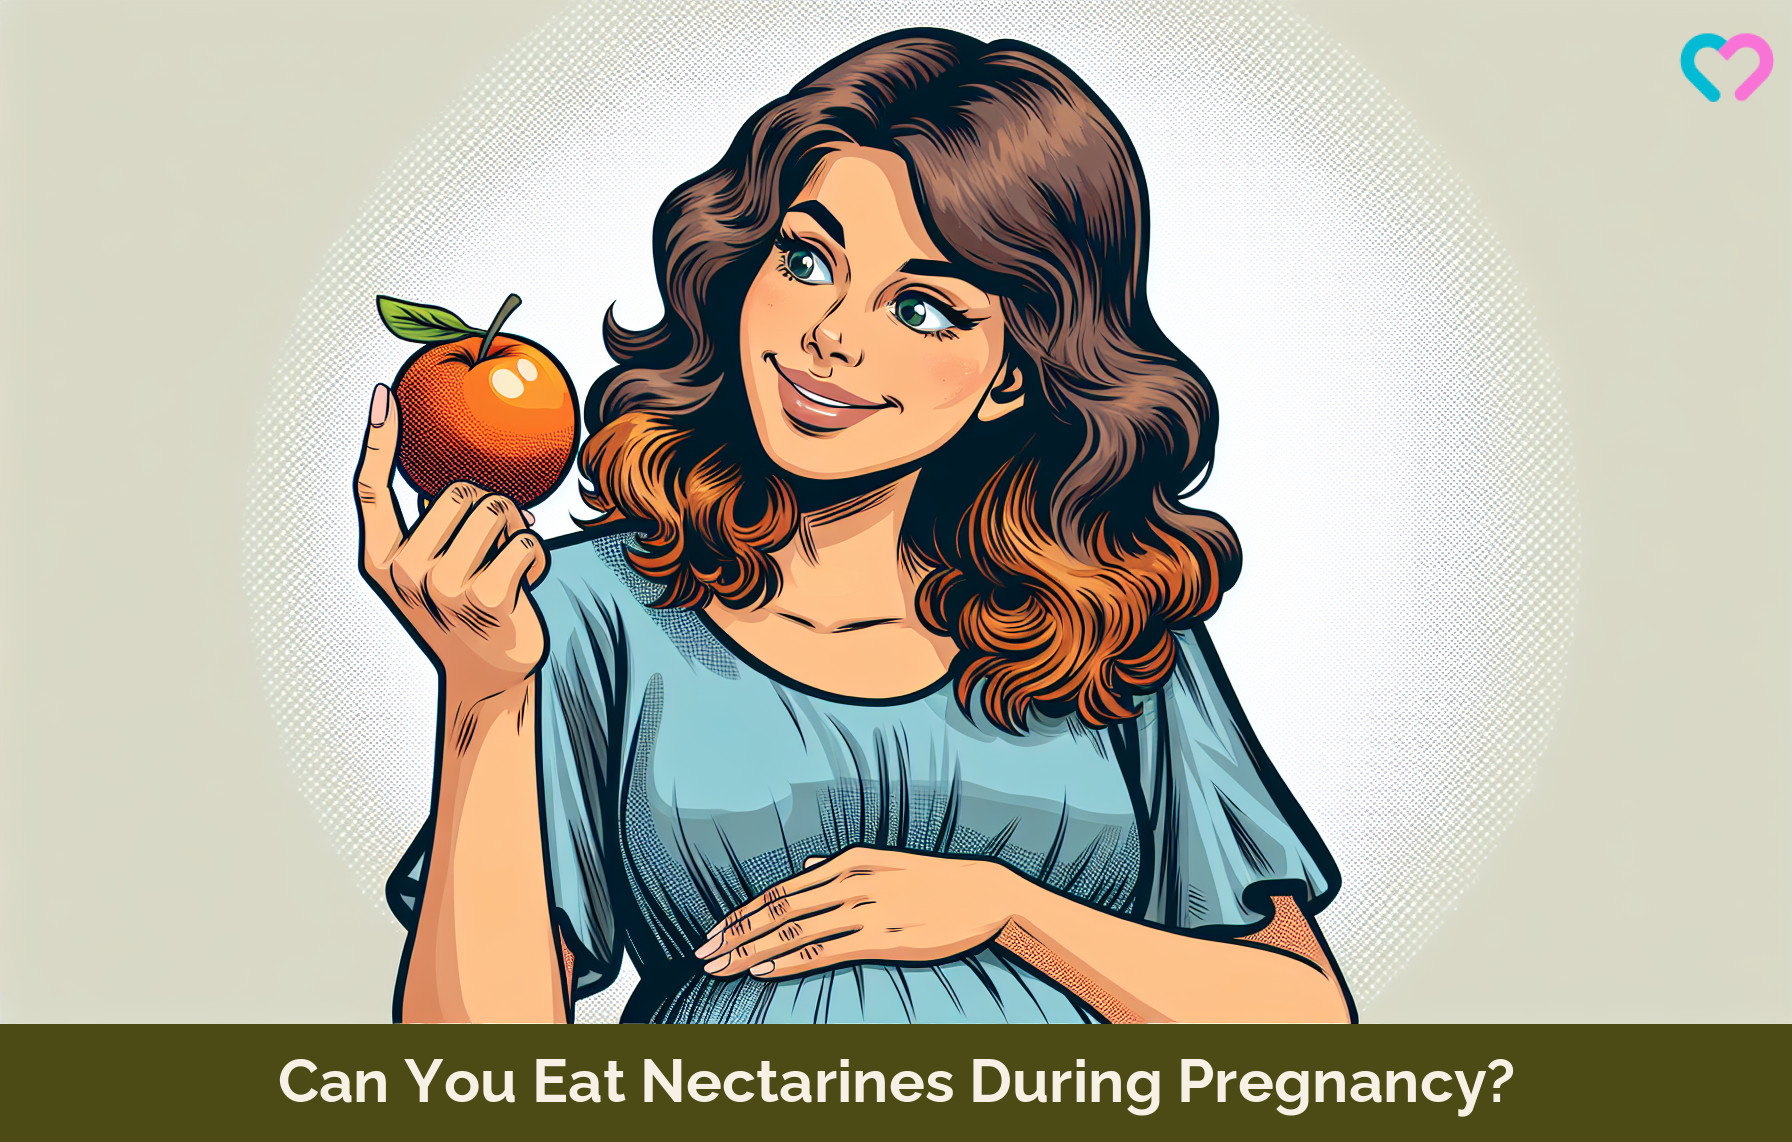 Nectarines When Pregnant_illustration